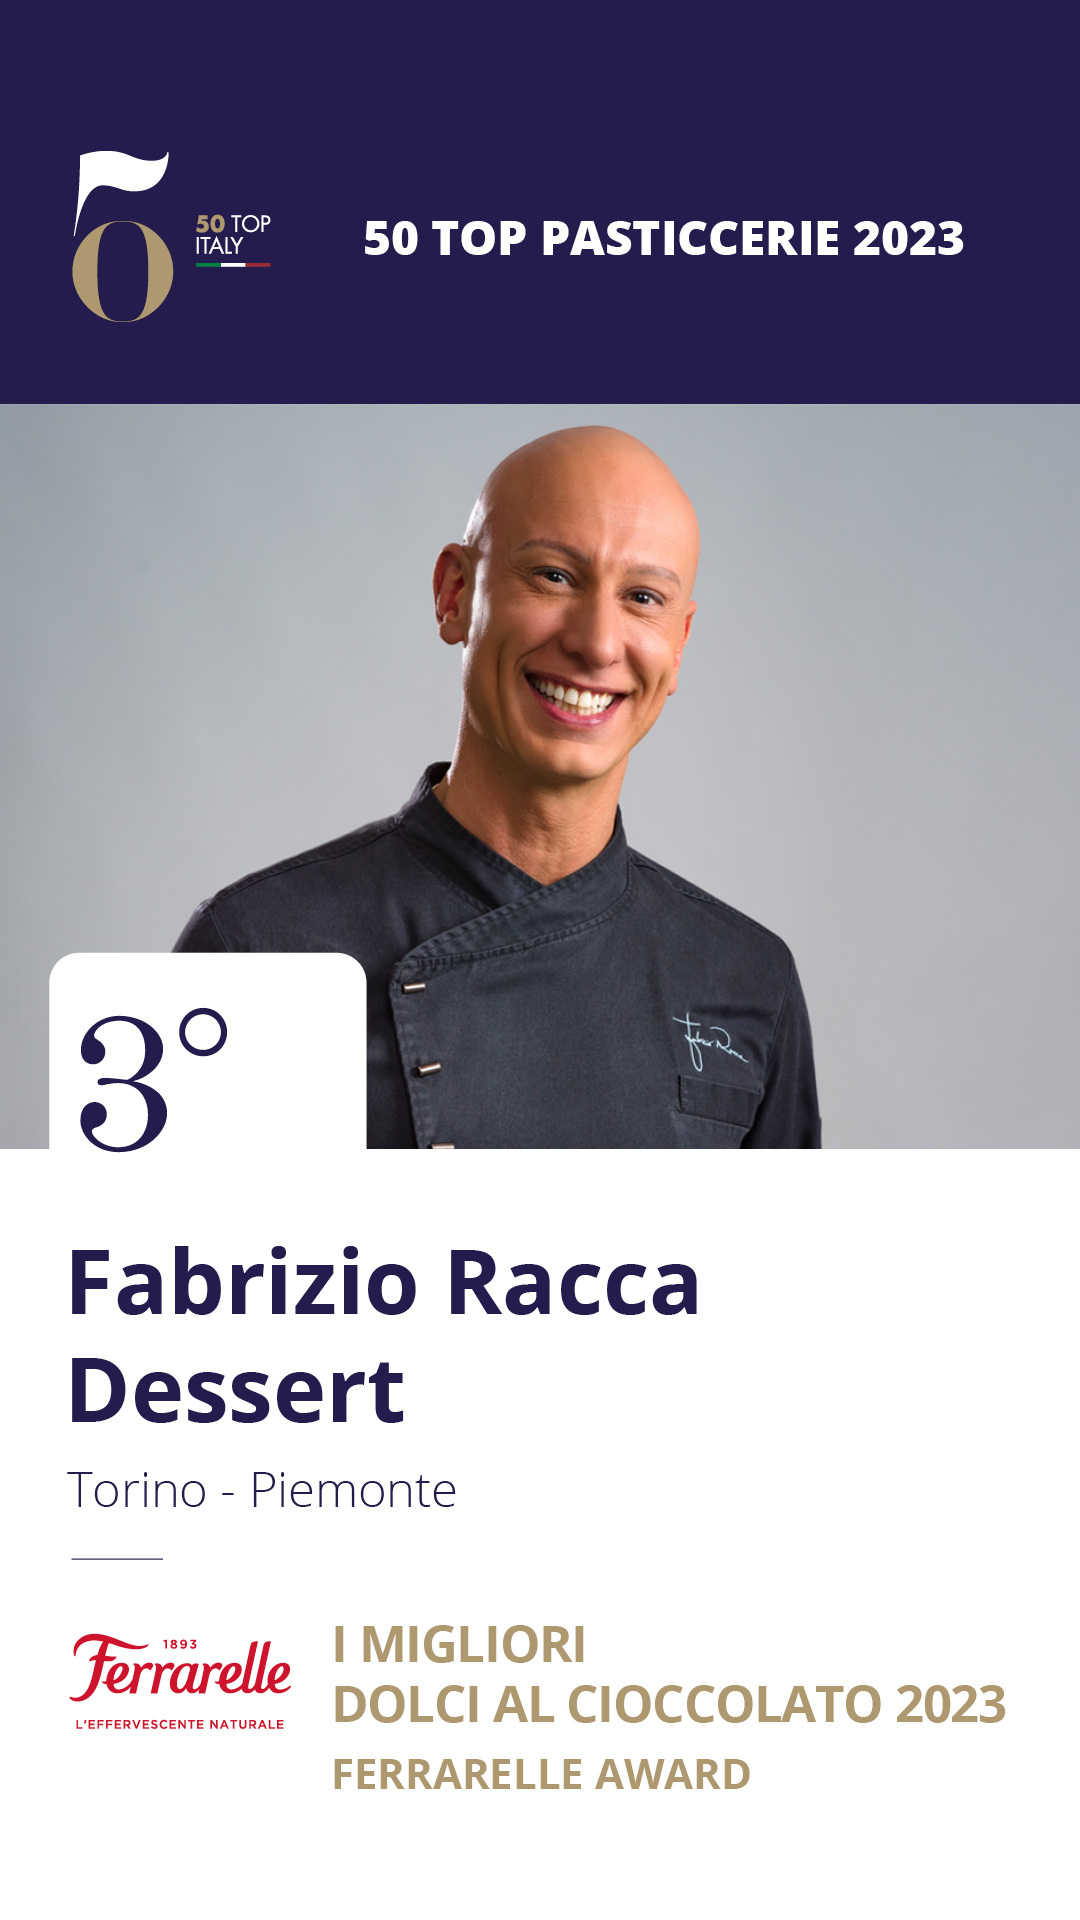 3. Fabrizio Racca Dessert – Torino, Piemonte